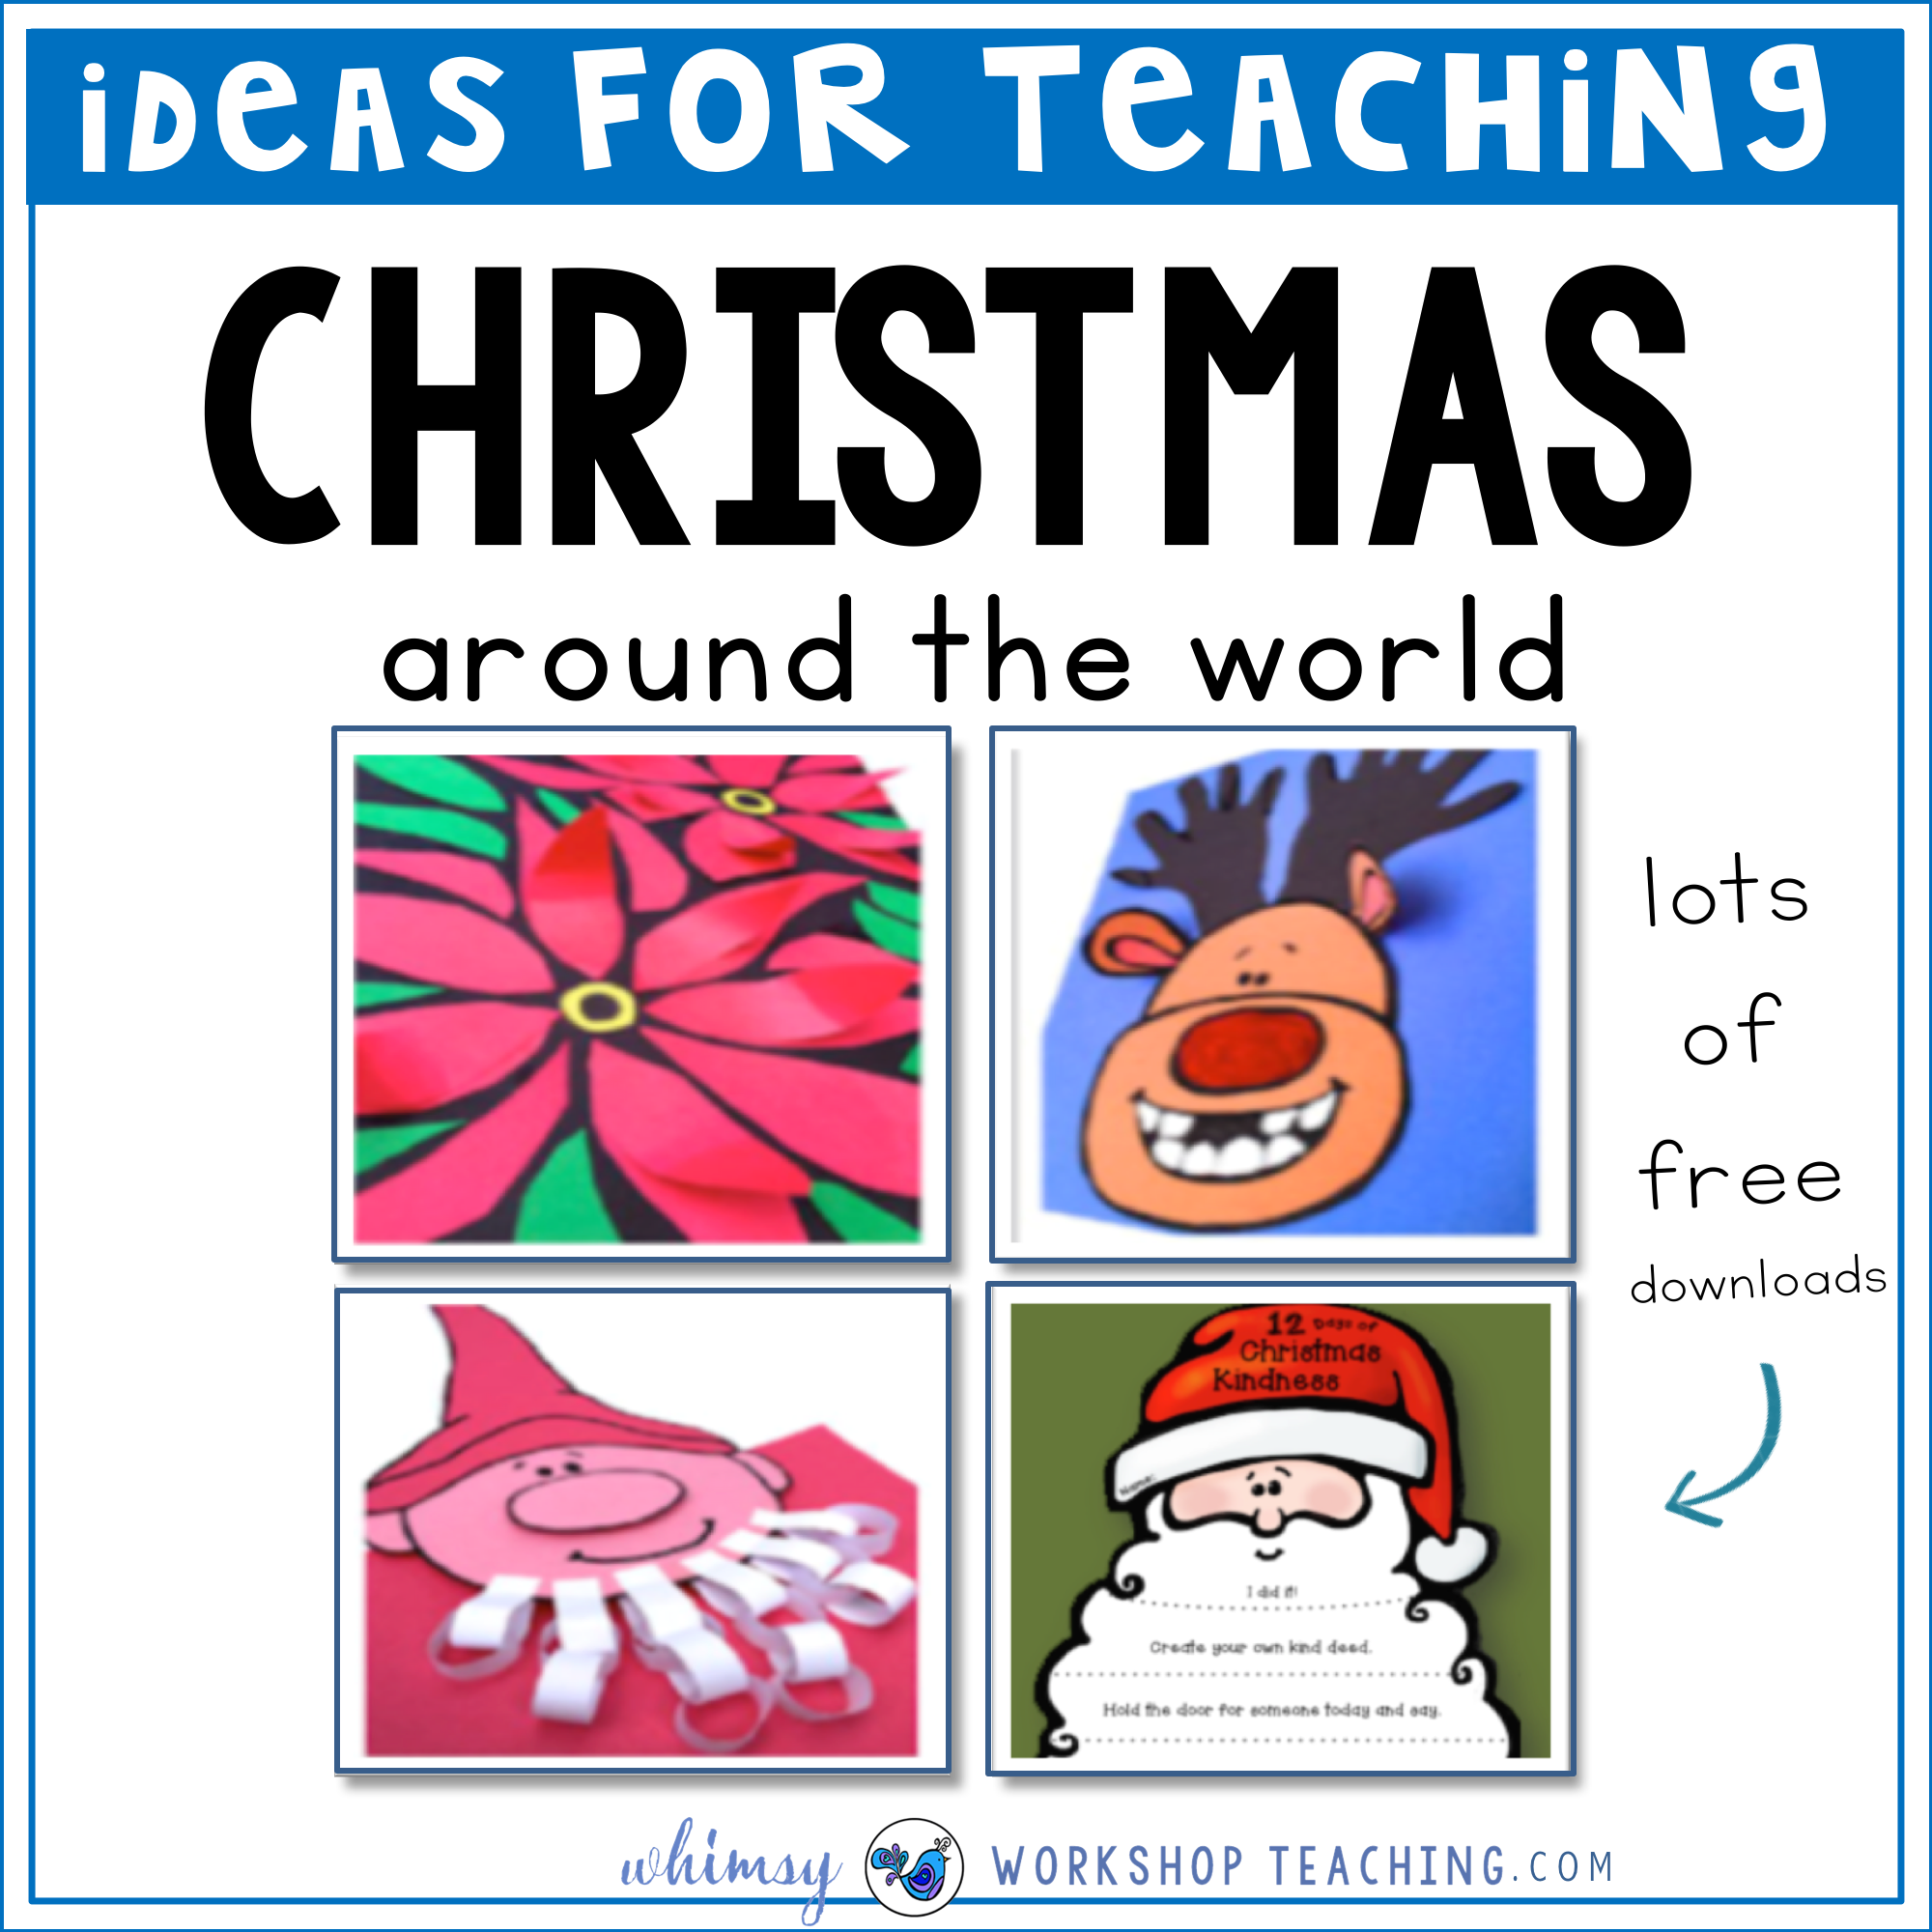 Ideas for teaching Christmas around the world